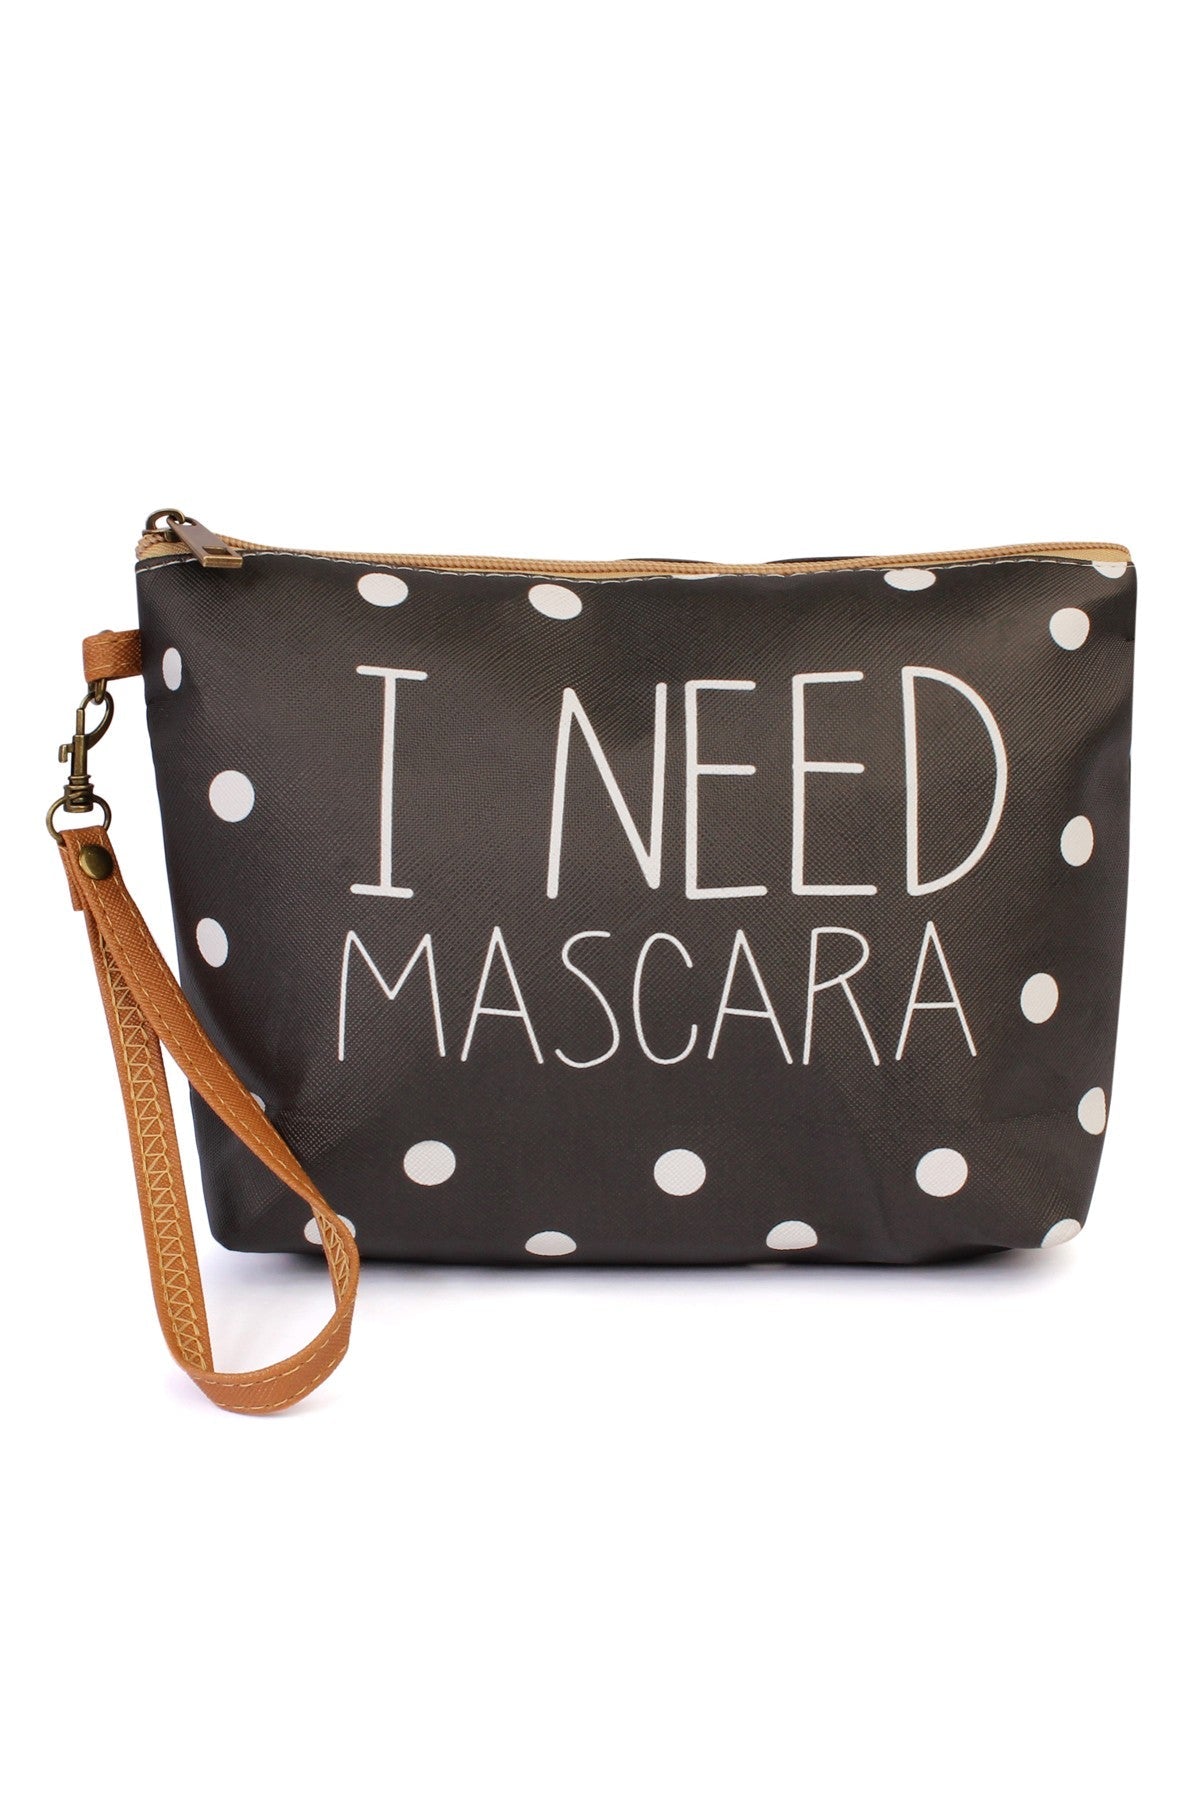 "I NEED MASCARA" WRISTLET MAKE UP BAG